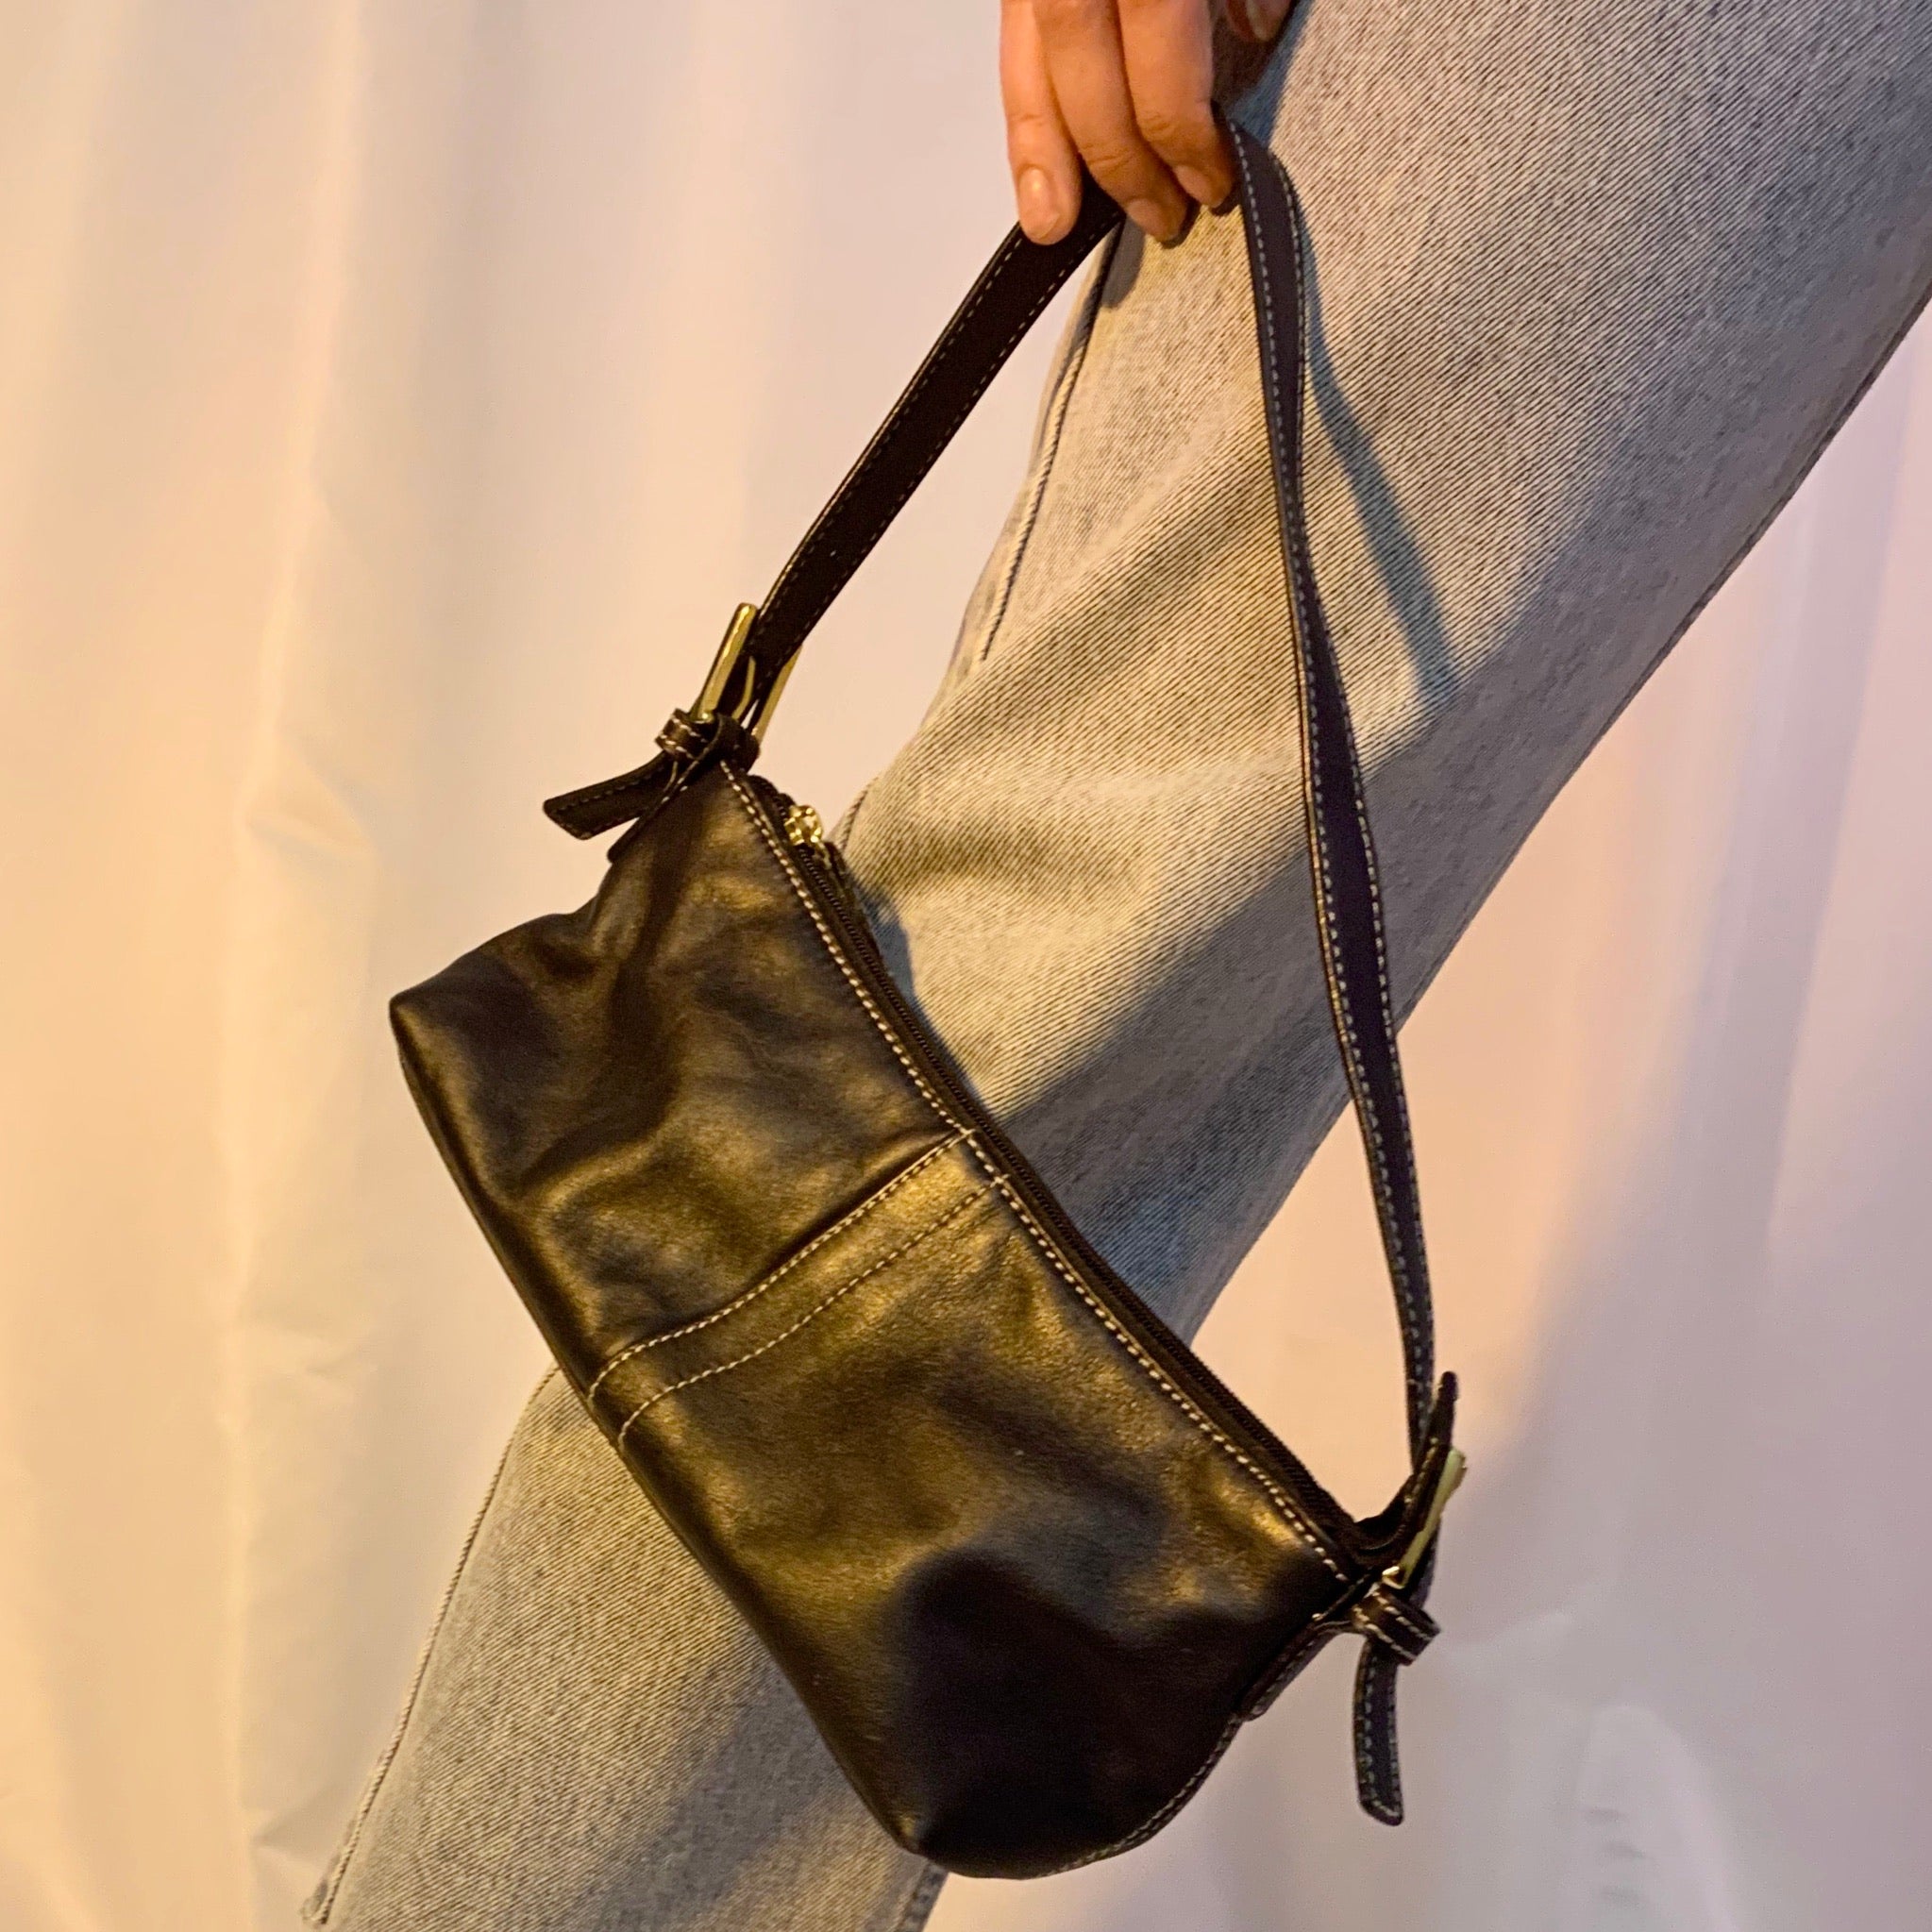 Baguette bag DIY, Sewing 90s style bag, faux leather bag sewing tutorial,  Craft video, Anita Benko - YouTube